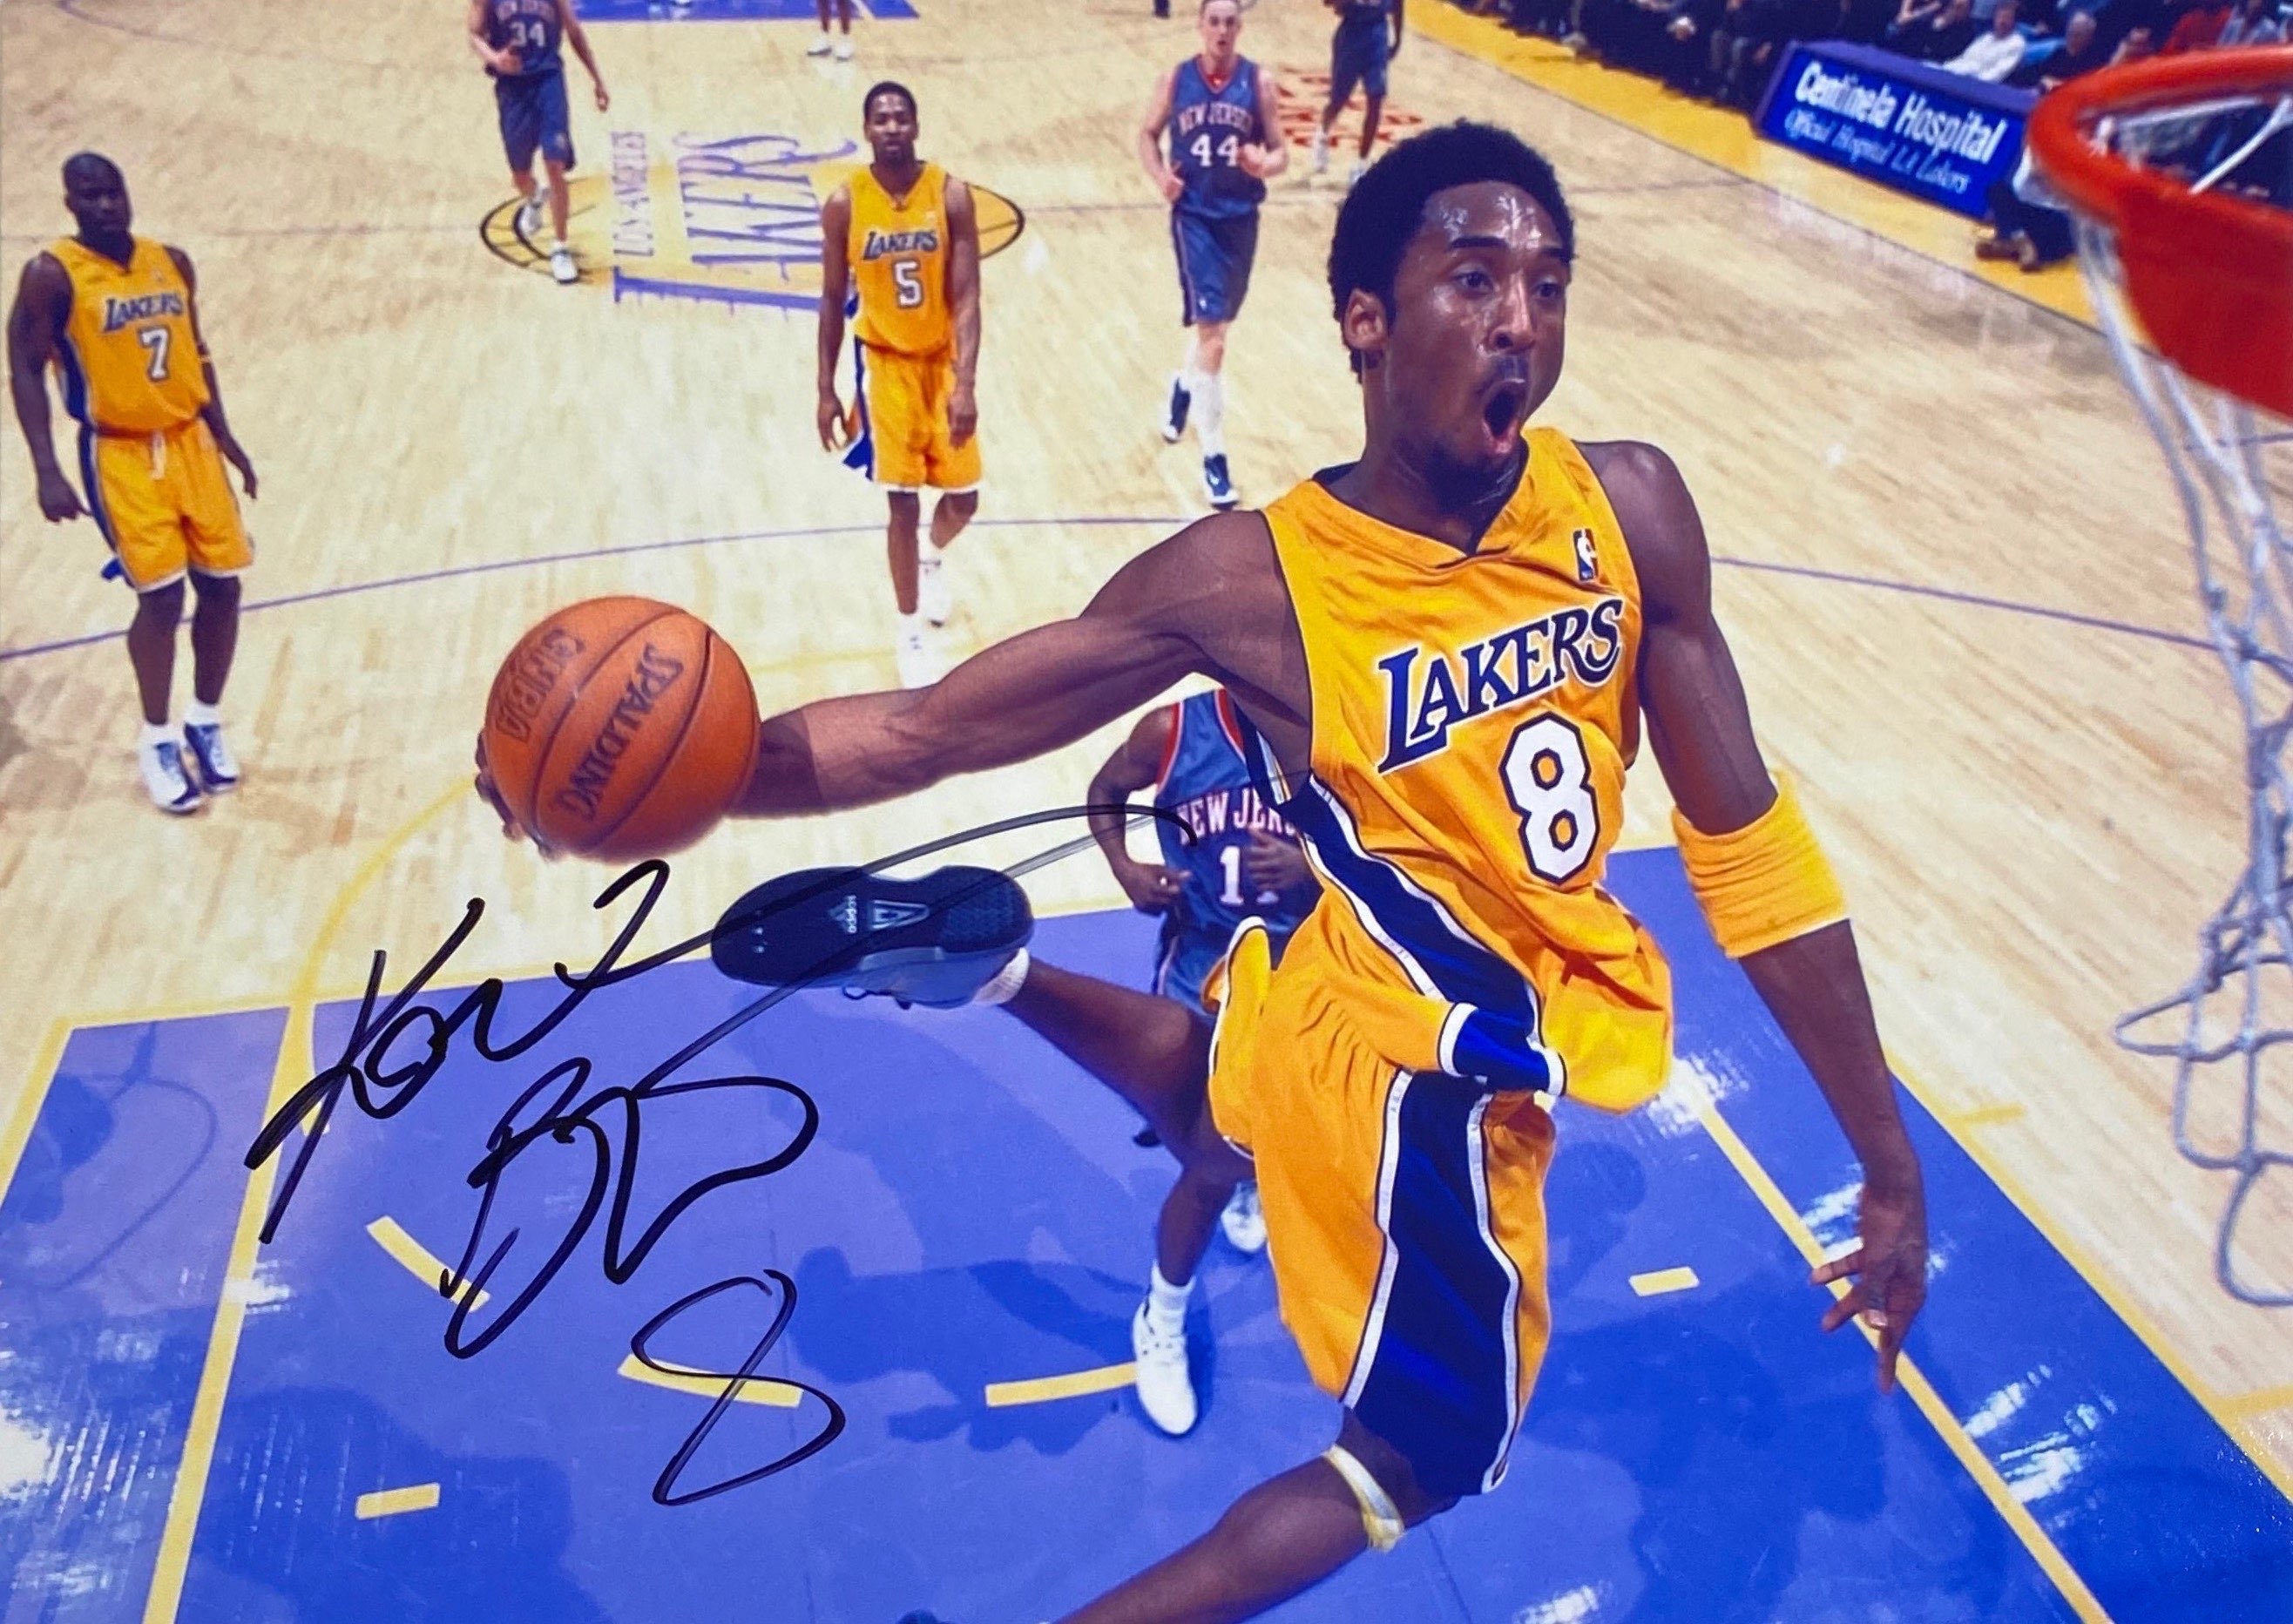 Kobe Bryant Framed “Dear Basketball” Retirement Speech 24x34 w Replica  Signature